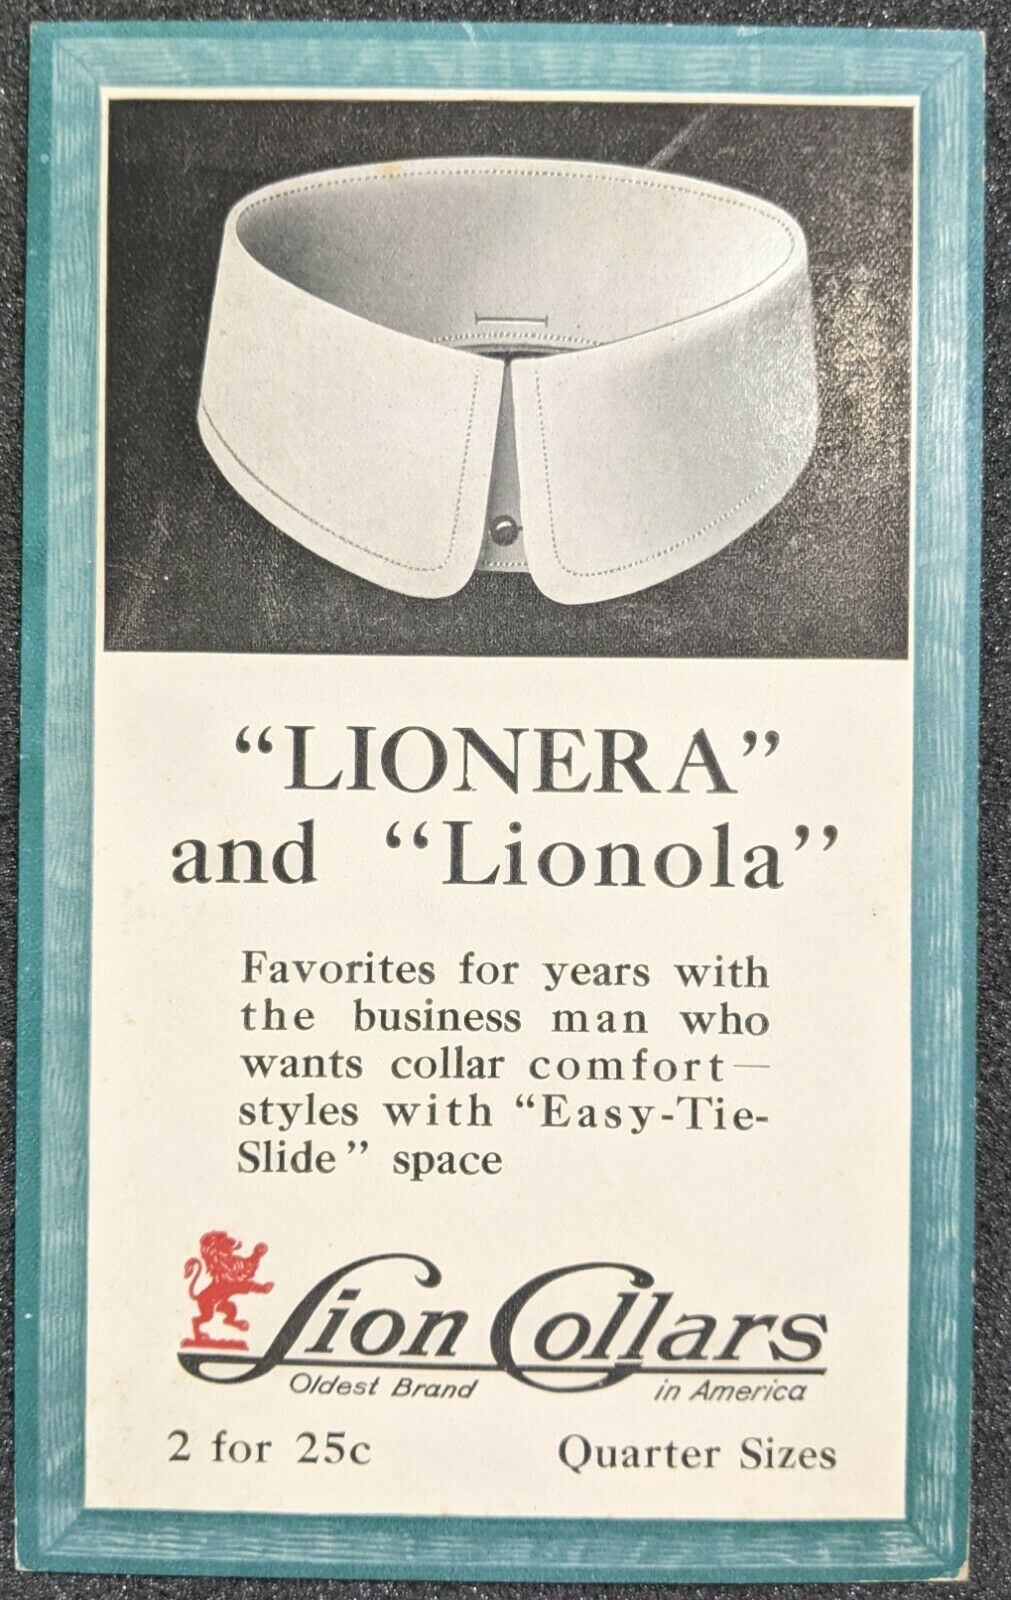 Vintage 1910s Lionera Lionola Lion Shirt Collars Advertisement Sign Card